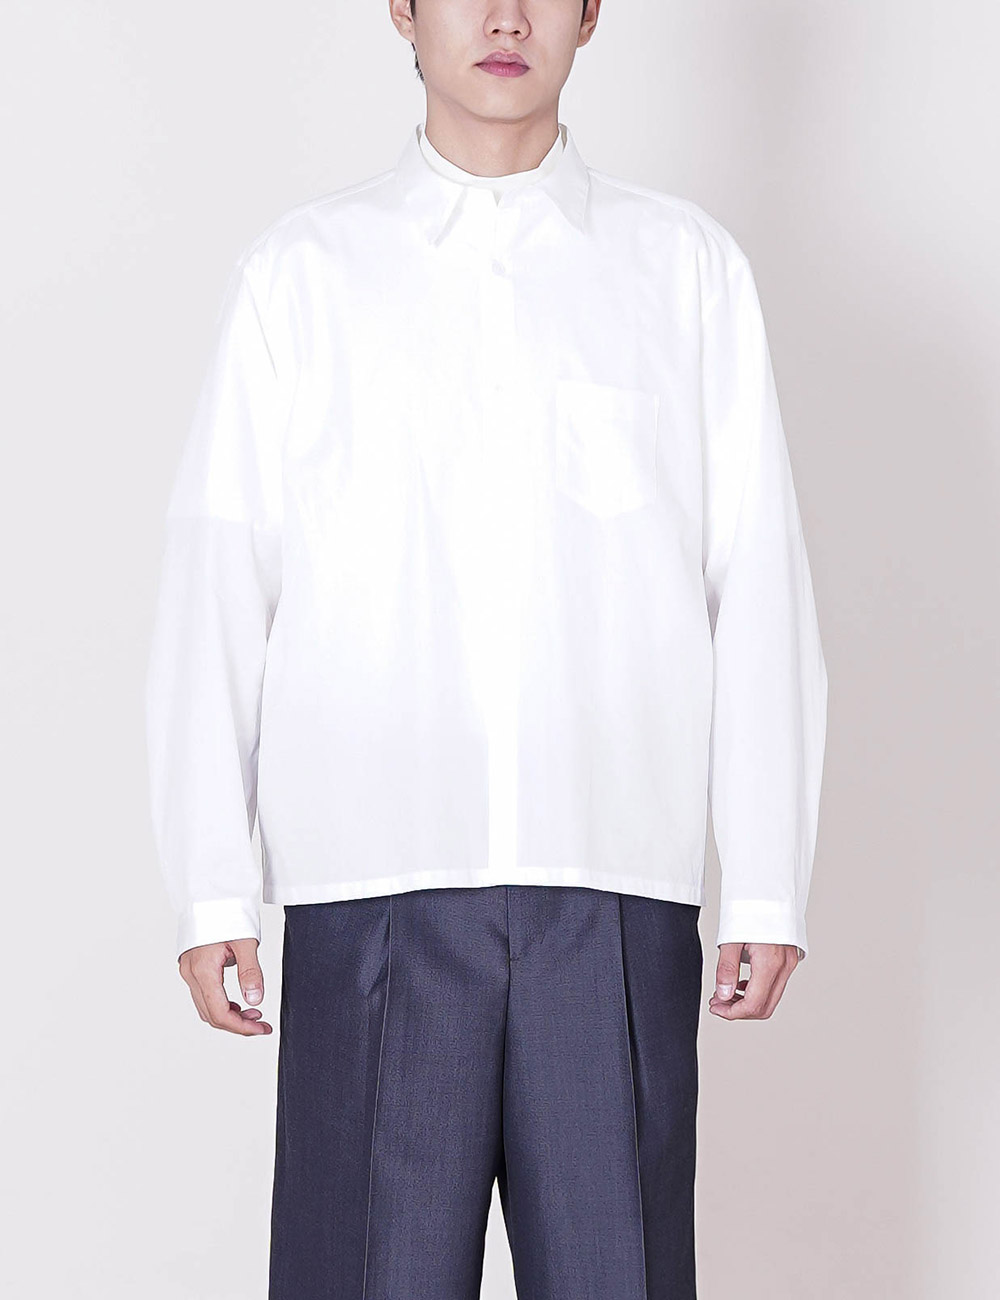 Crop Top Shirt (White)